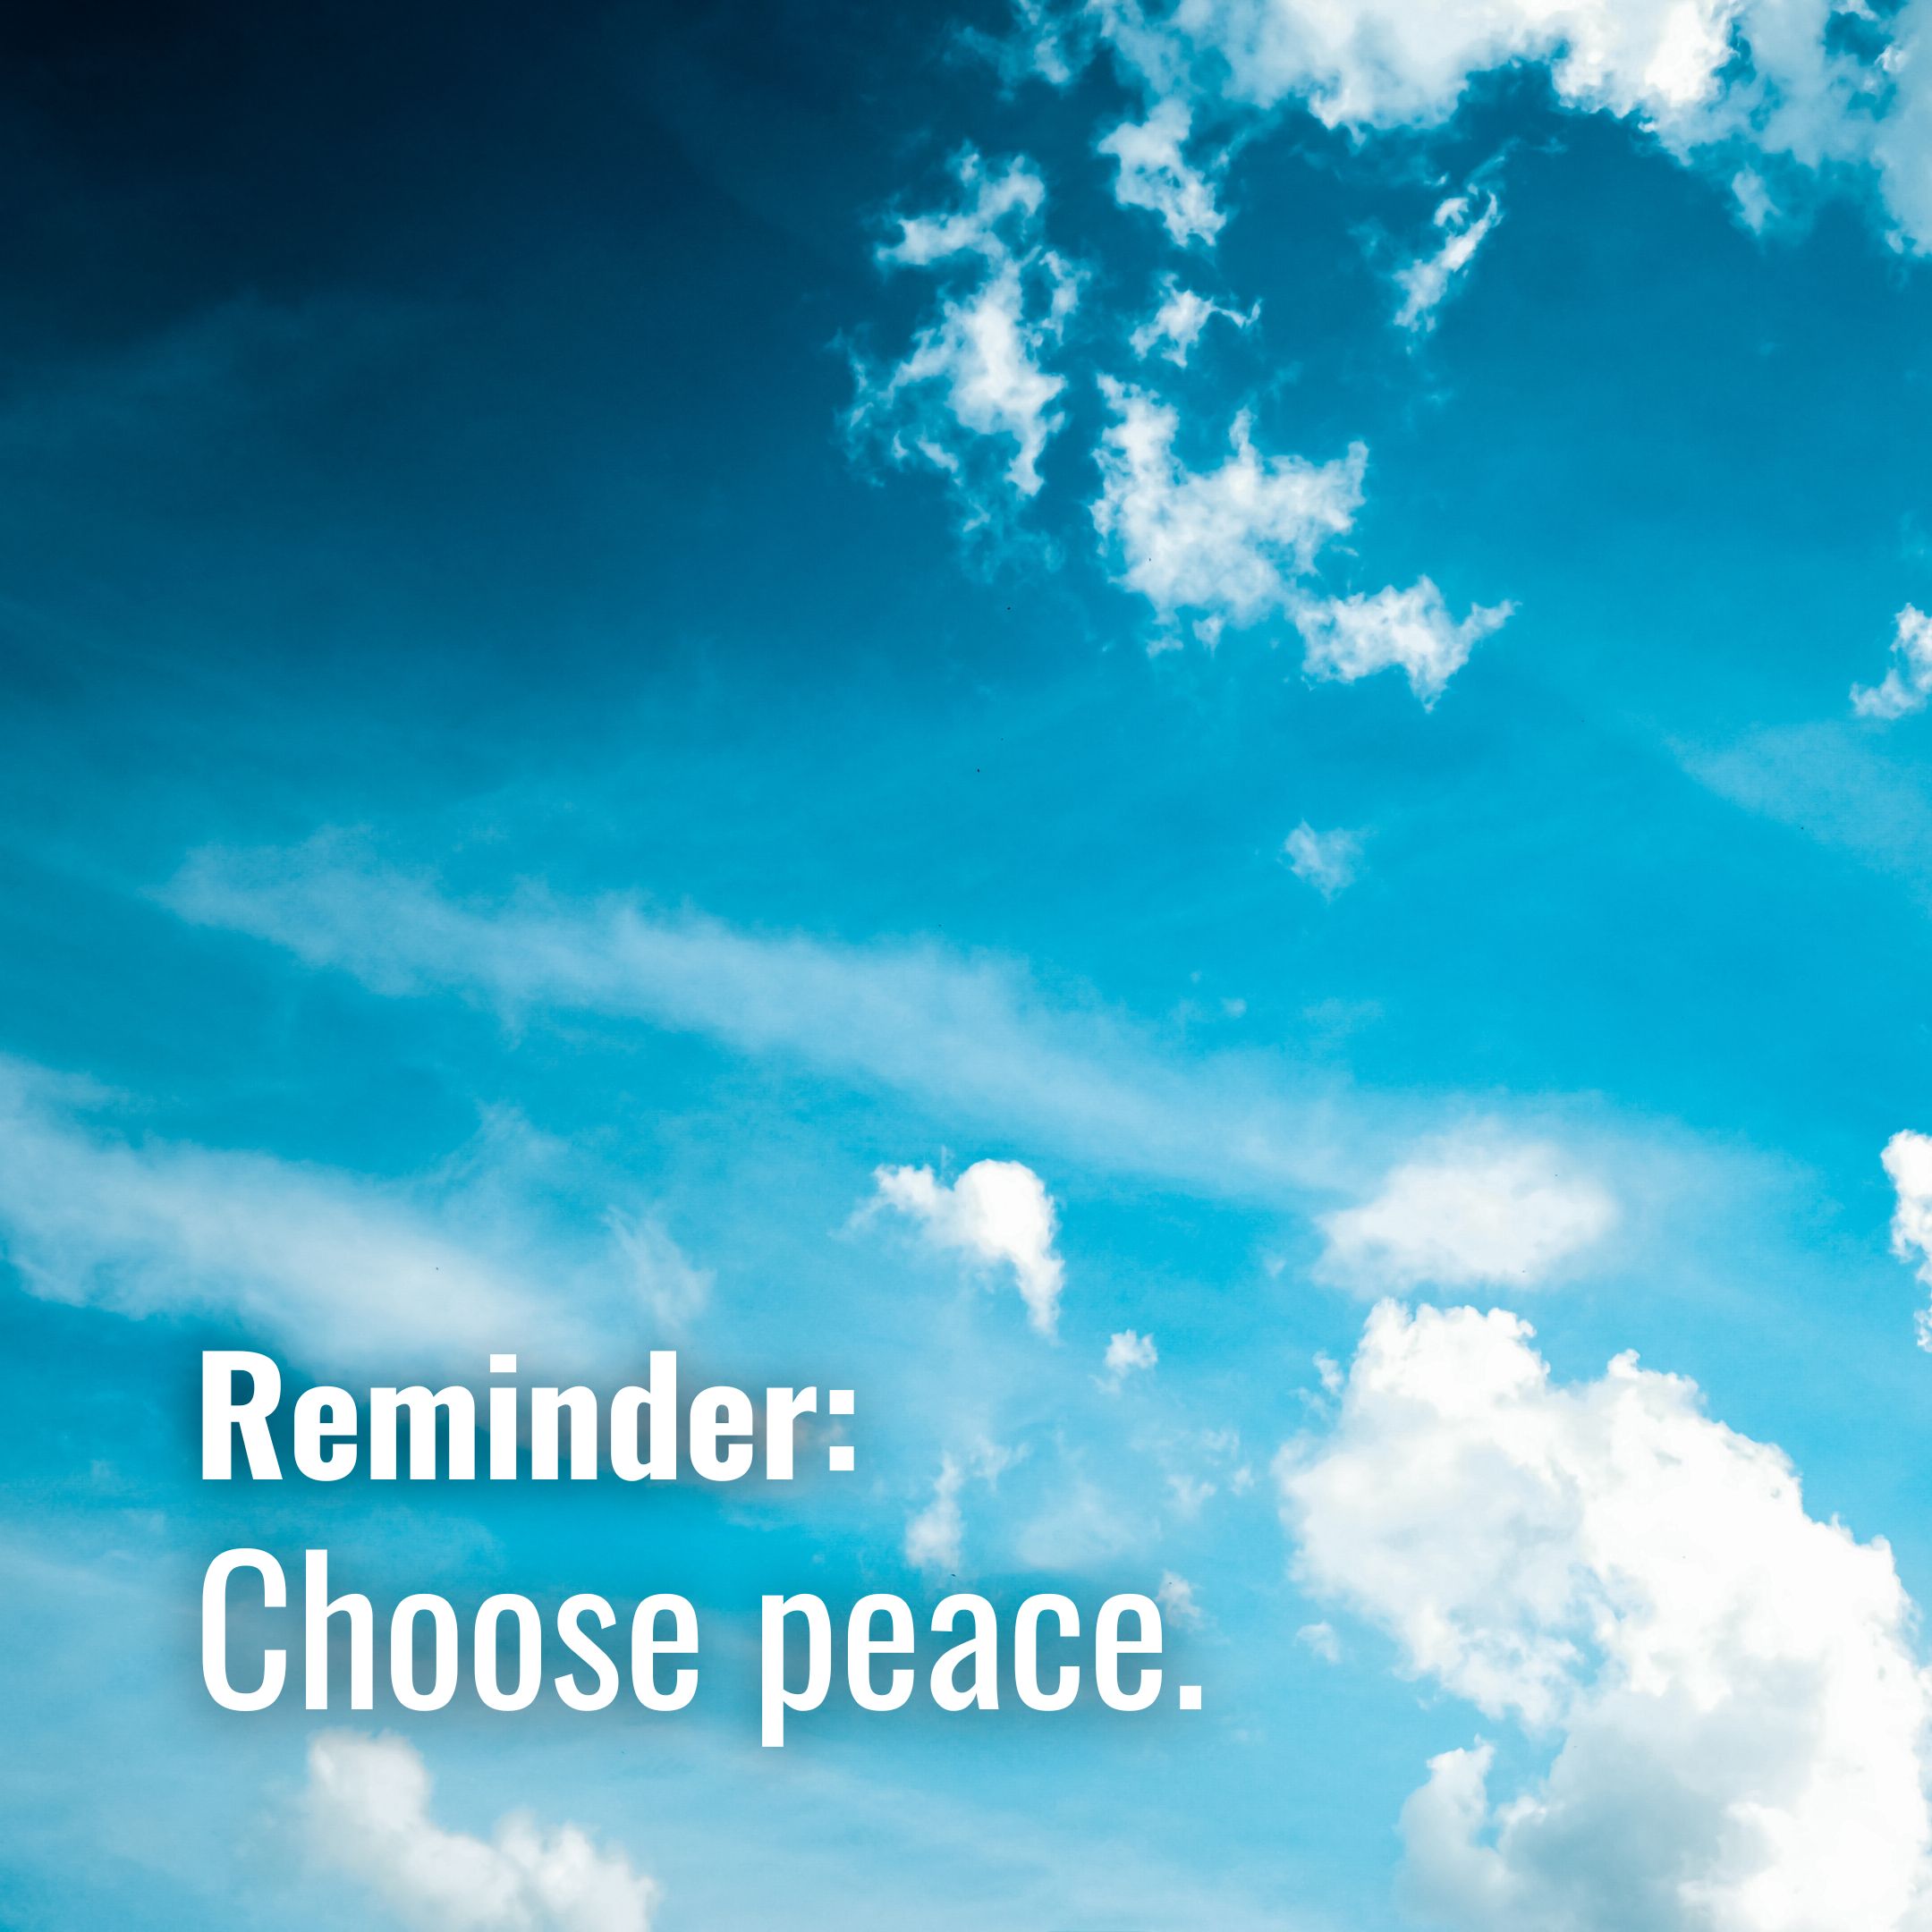 Choose peace.